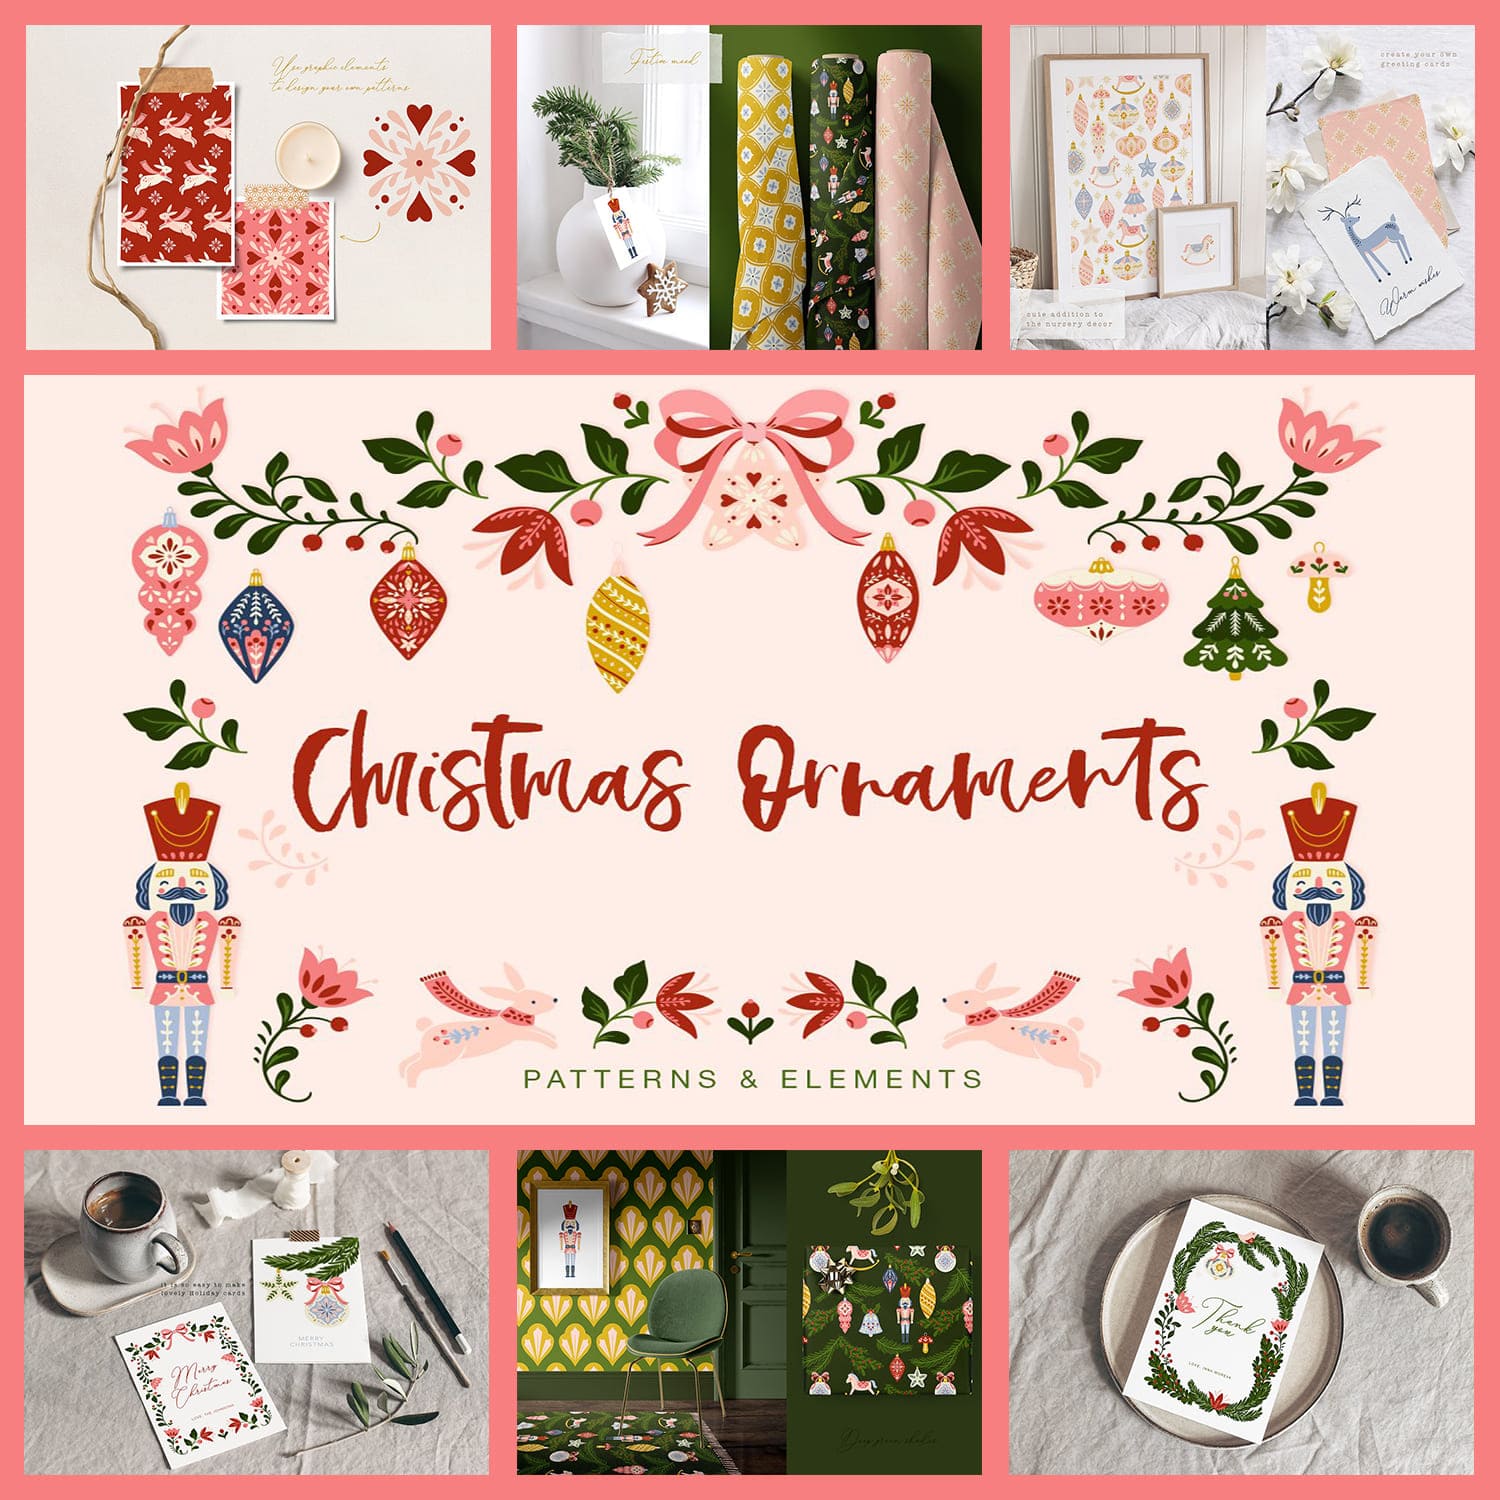 Christmas Ornaments - Patterns & Elements.